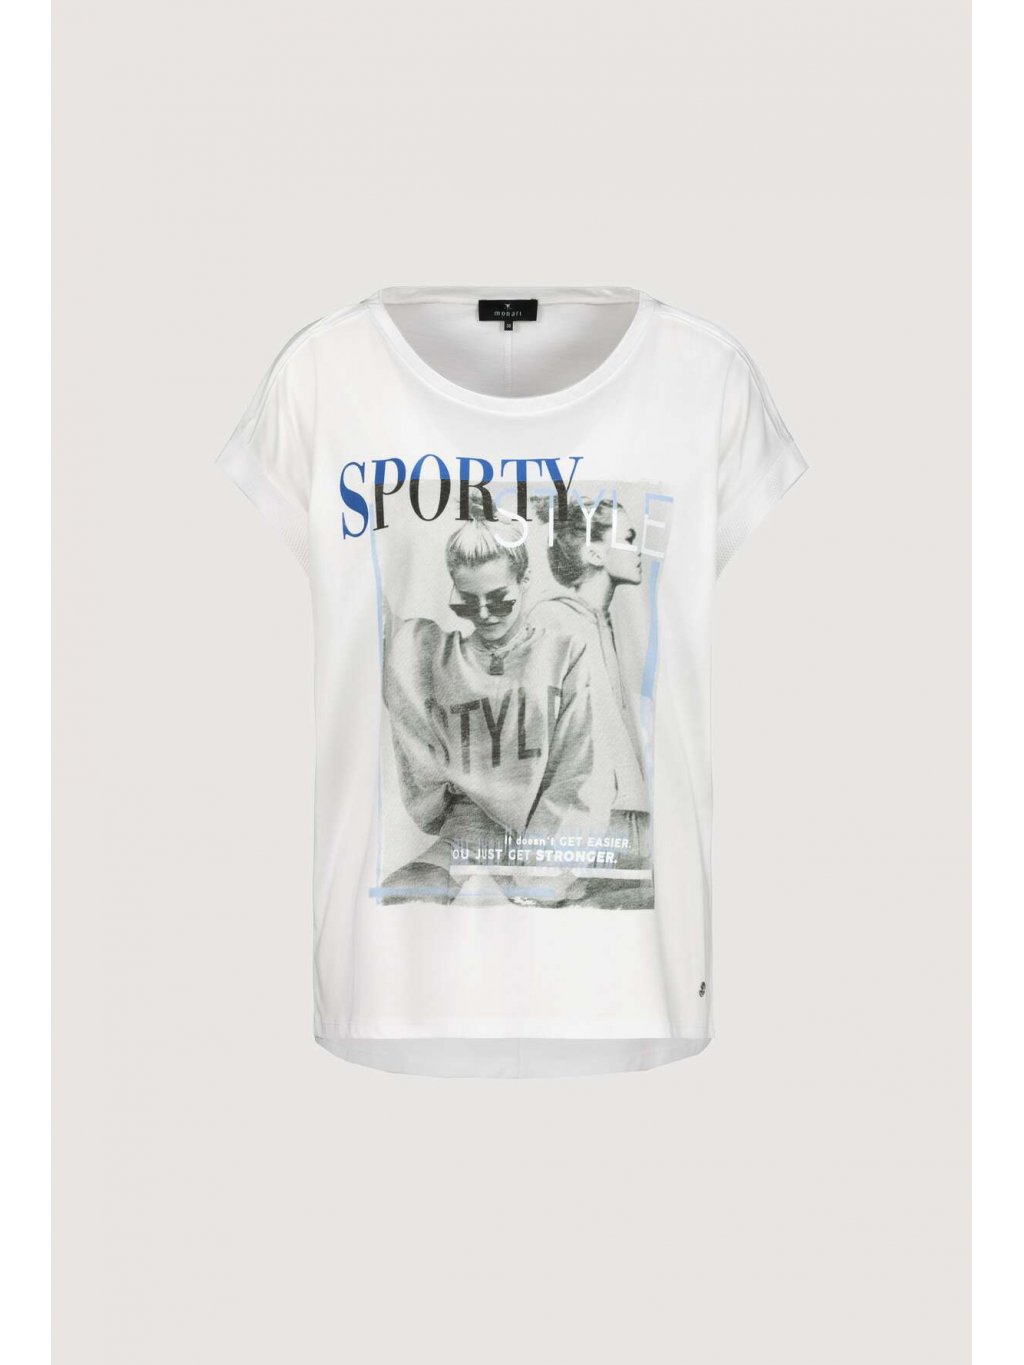 Tričko Monari 7074 bílé s grafikou ženy sporty style